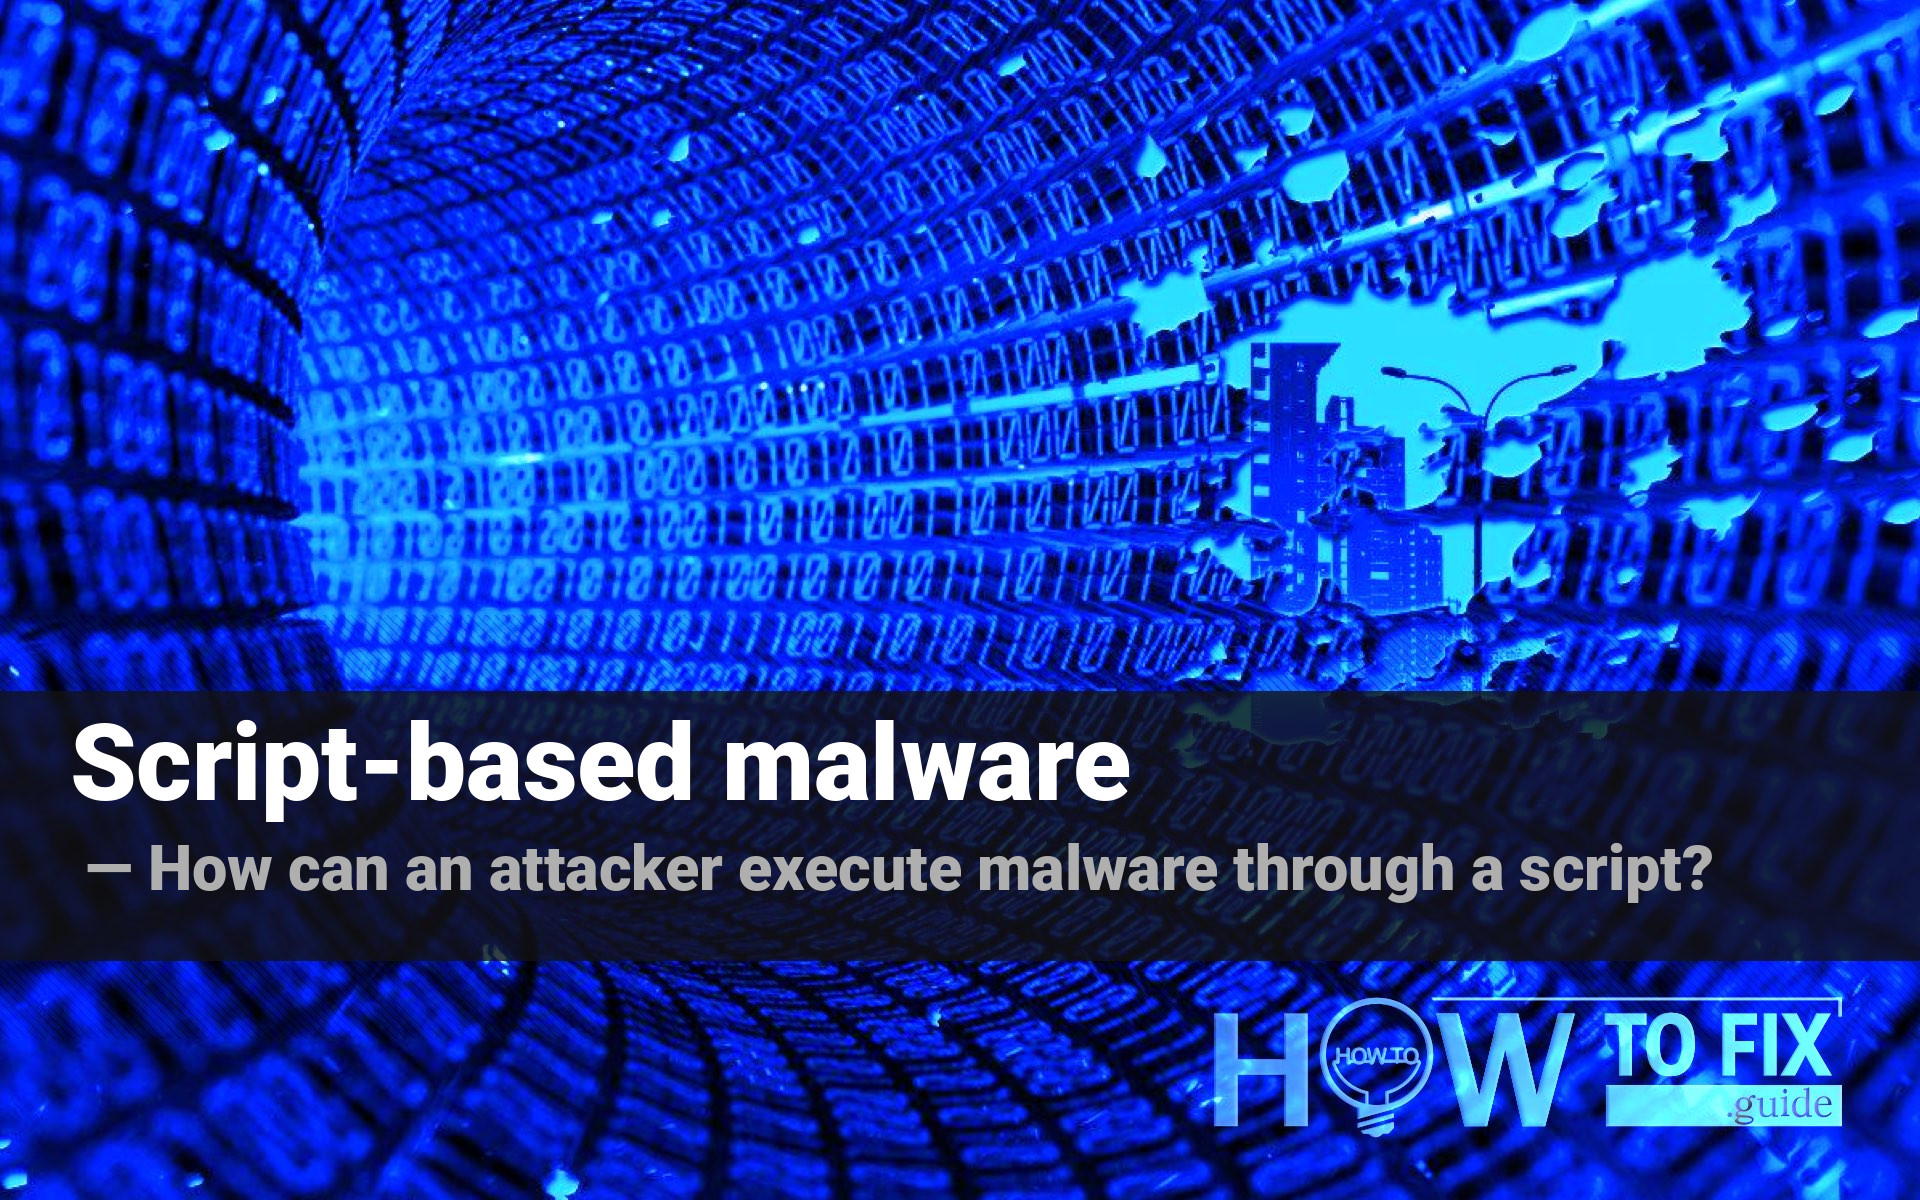 Script-based malware. How can an attacker execute malware through a script?